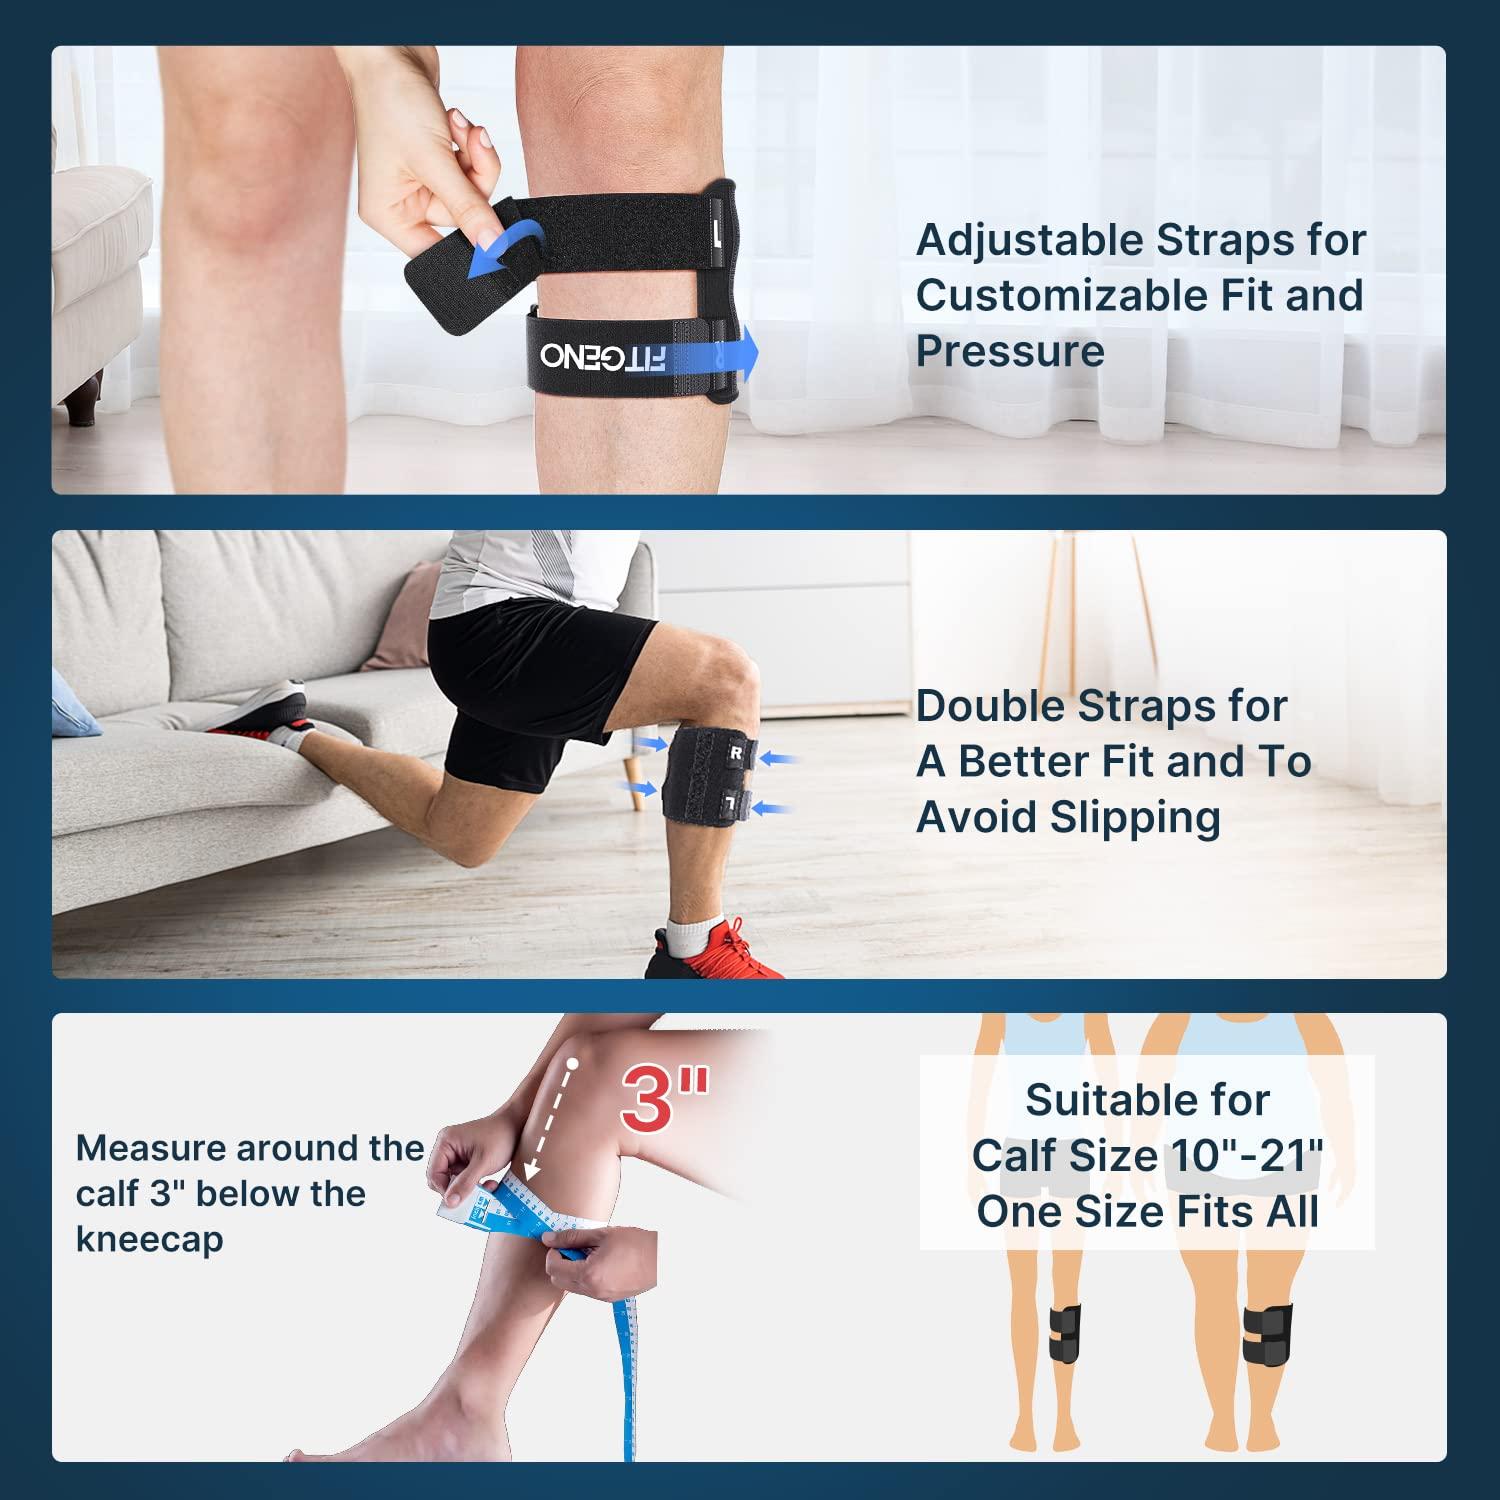 Healrecux Sciatica Pain Relief Brace Devices, Upgraded Brace for Sciatic  Nerve Pain with Dual Pressure Pad Targeted Compression, Sciatic Nerve Brace